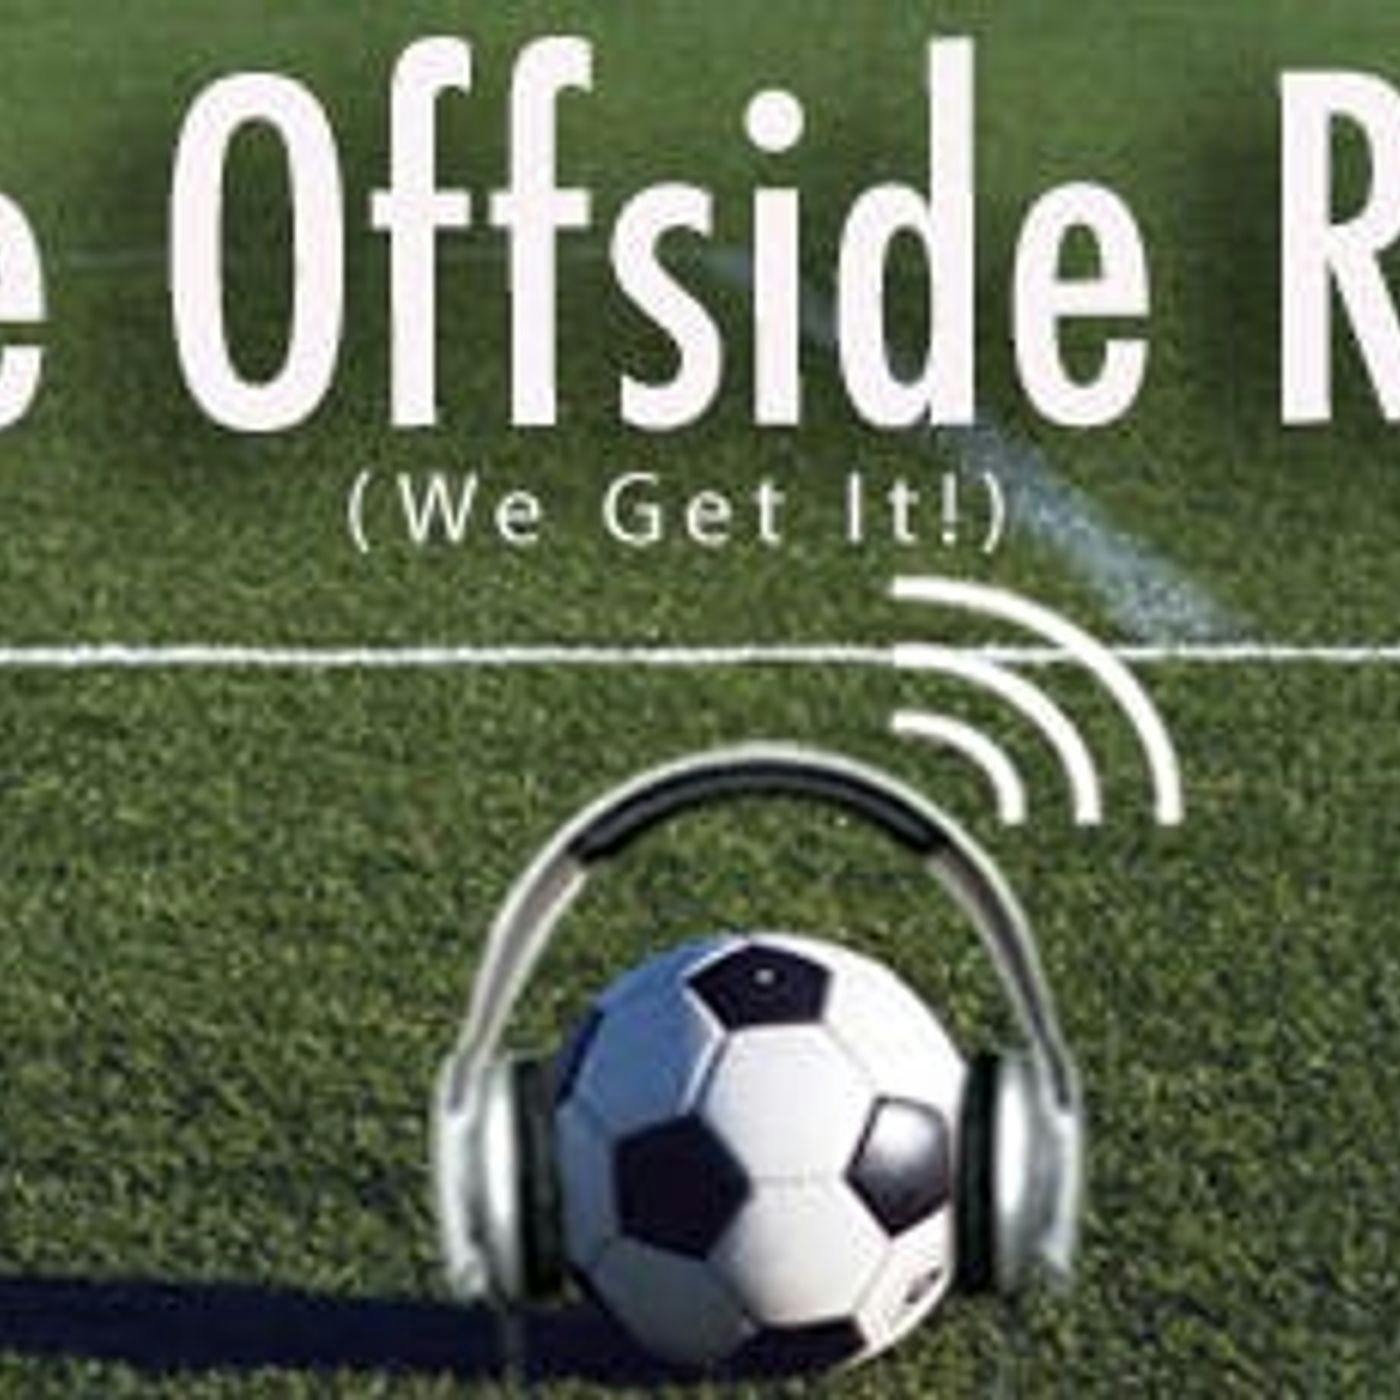 The Offside Rule 2013/14 Episode 25